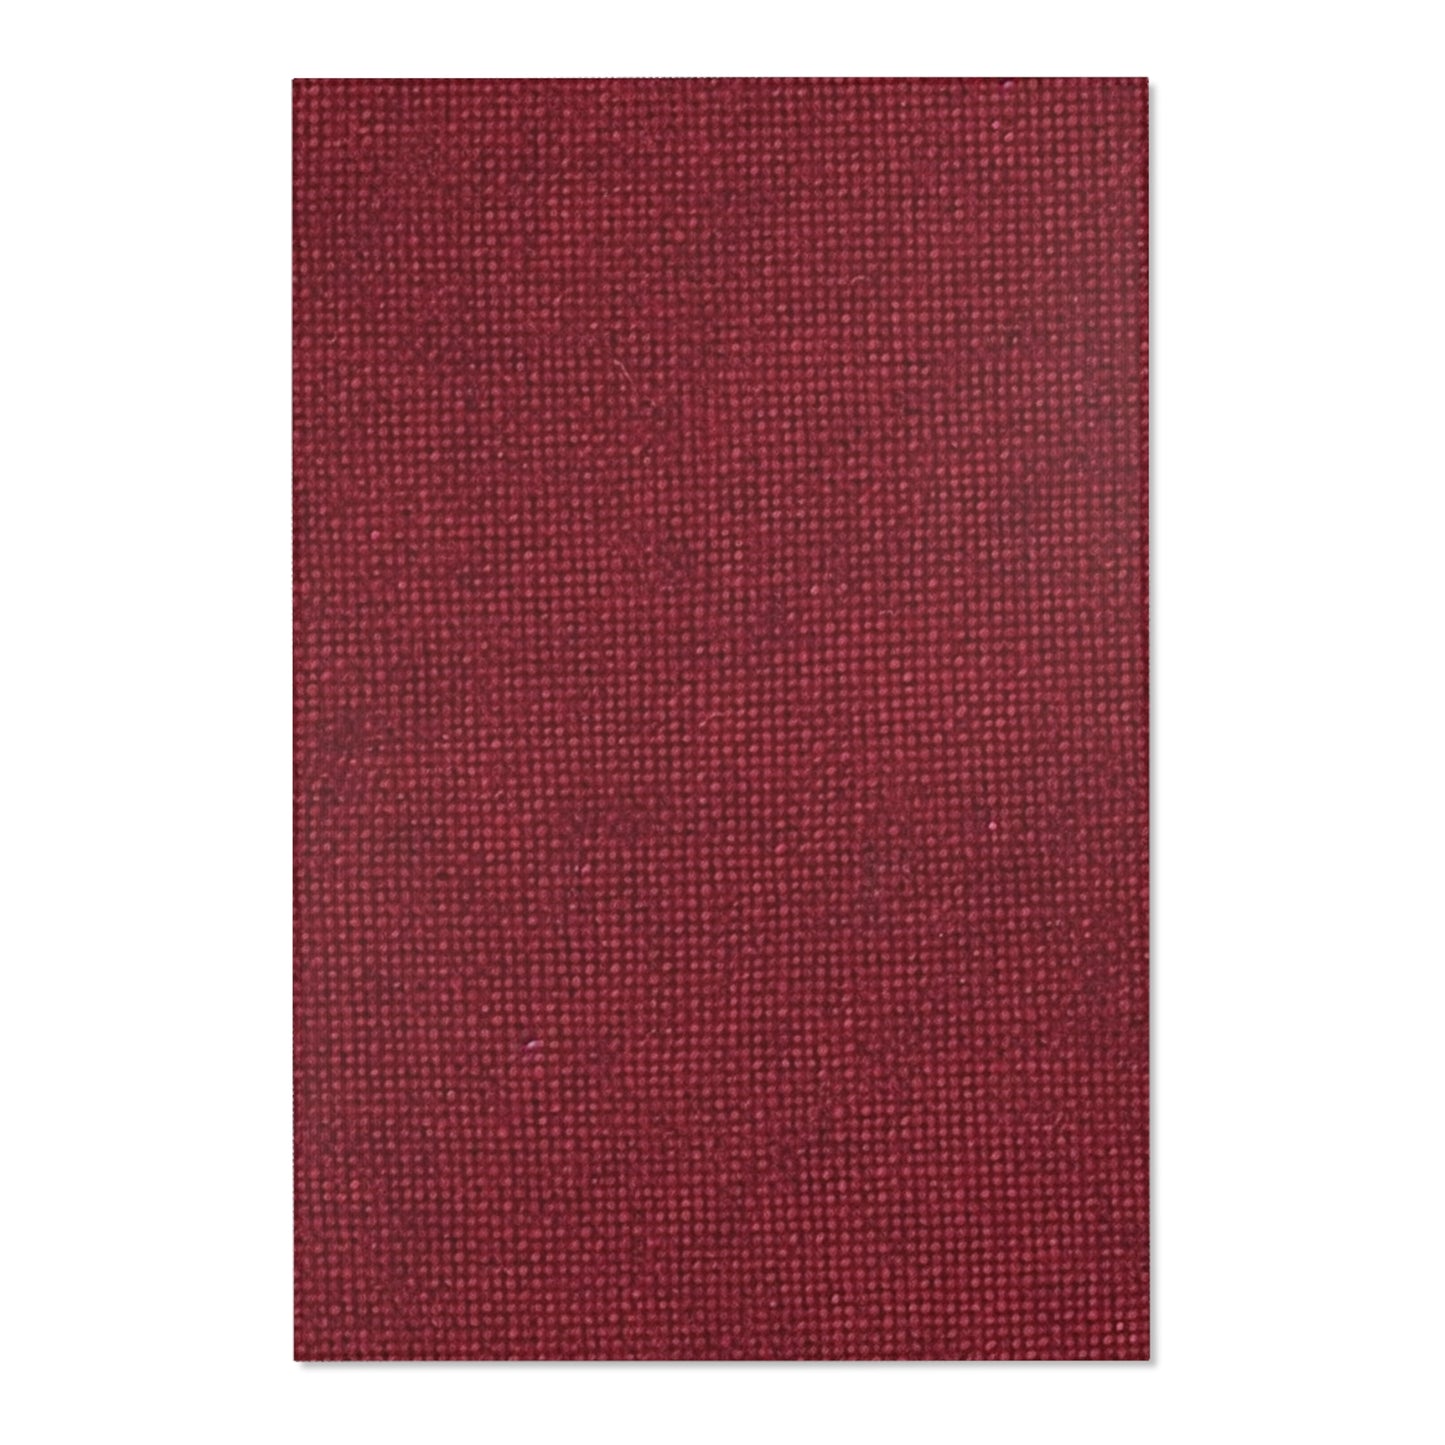 Seamless Texture - Maroon/Burgundy Denim-Inspired Fabric - Area Rugs